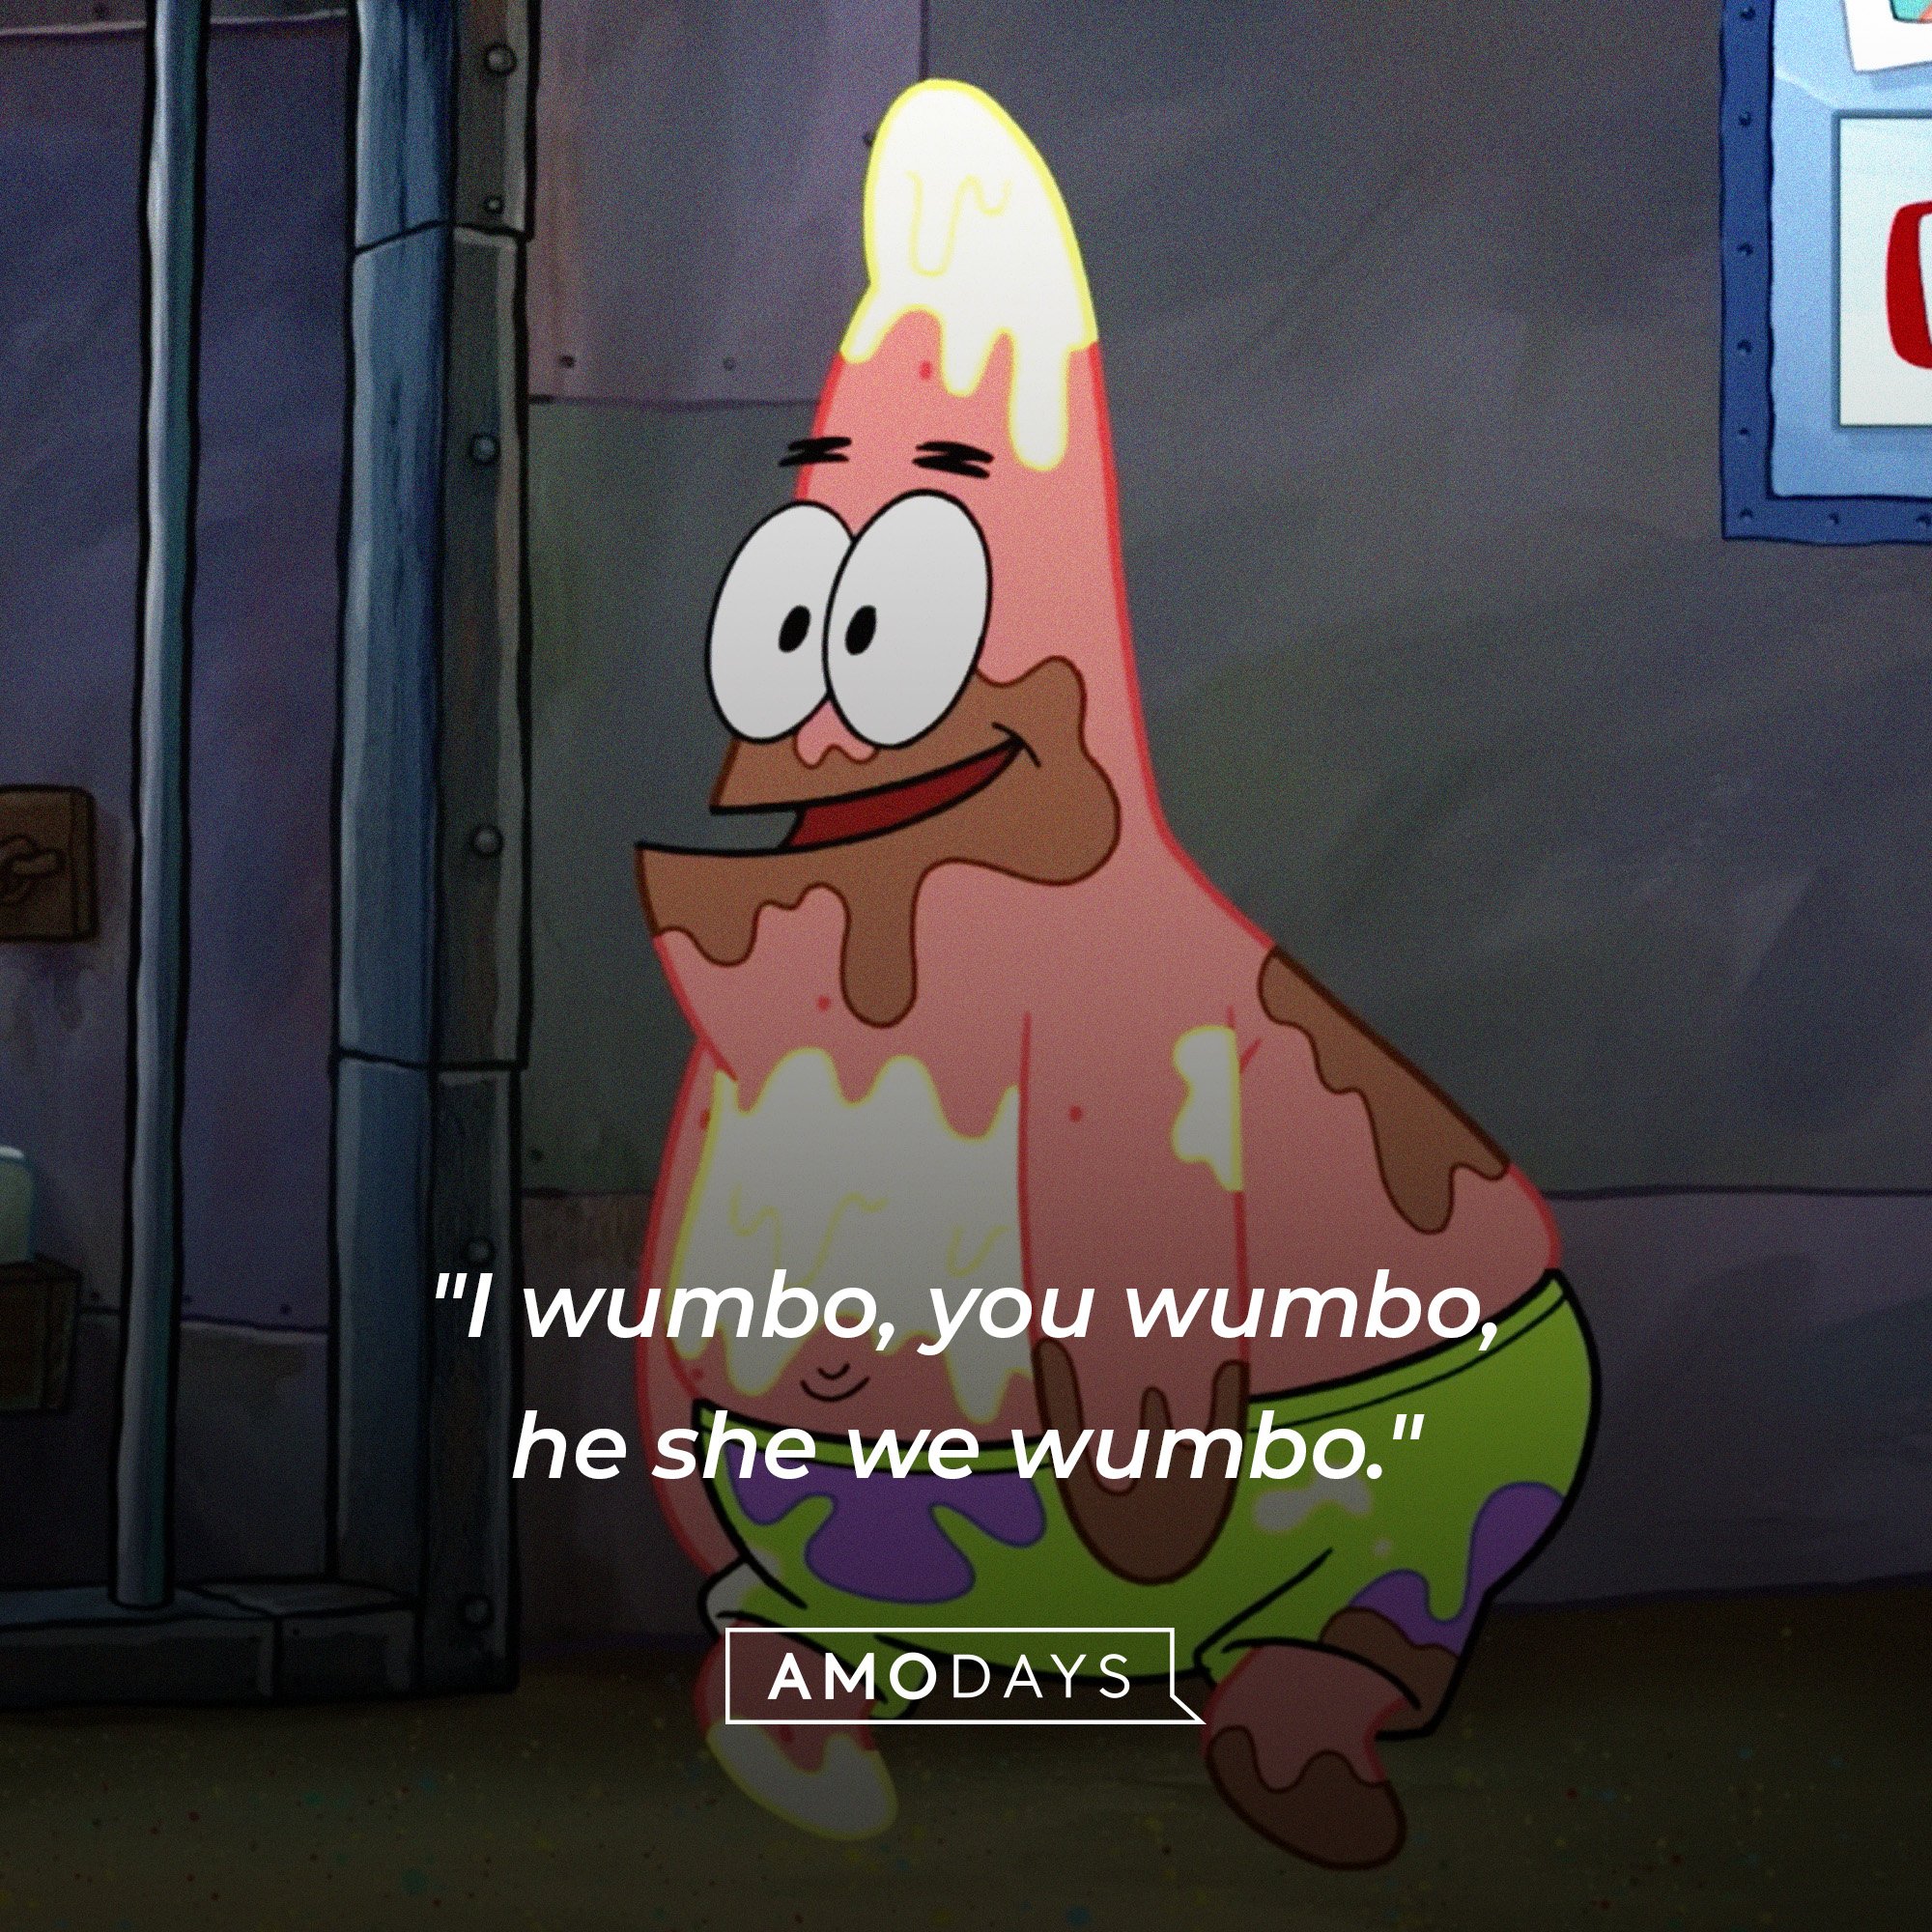 Patrick Star’s quote: "I wumbo, you wumbo, he she we wumbo." | Image: AmoDays